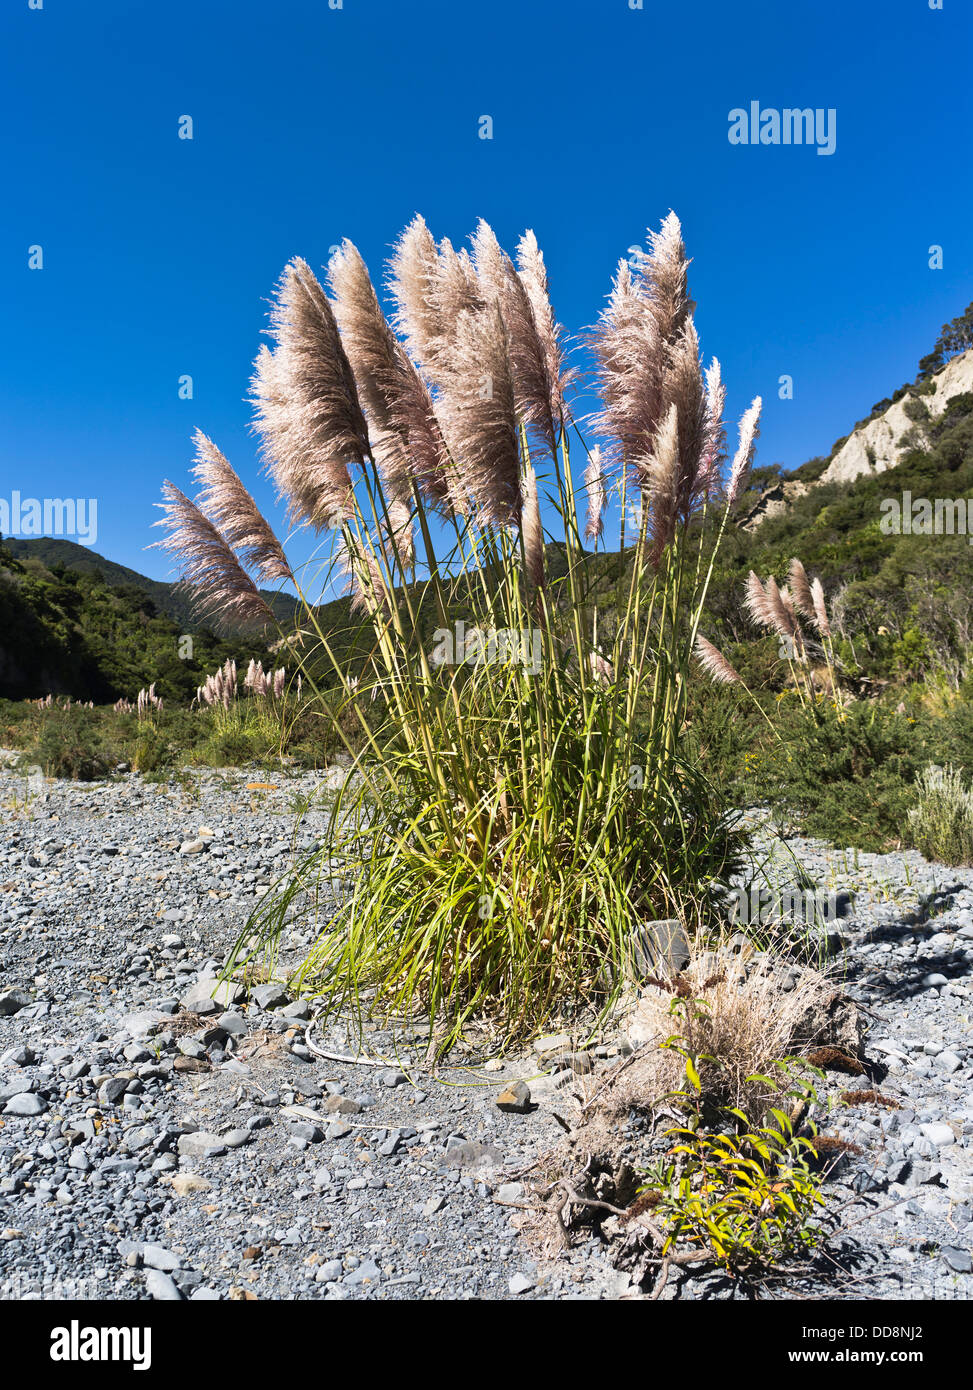 dh Toetoe AUSTRODERIA NZ New Zealand Toi Toi grass clump Stock Photo